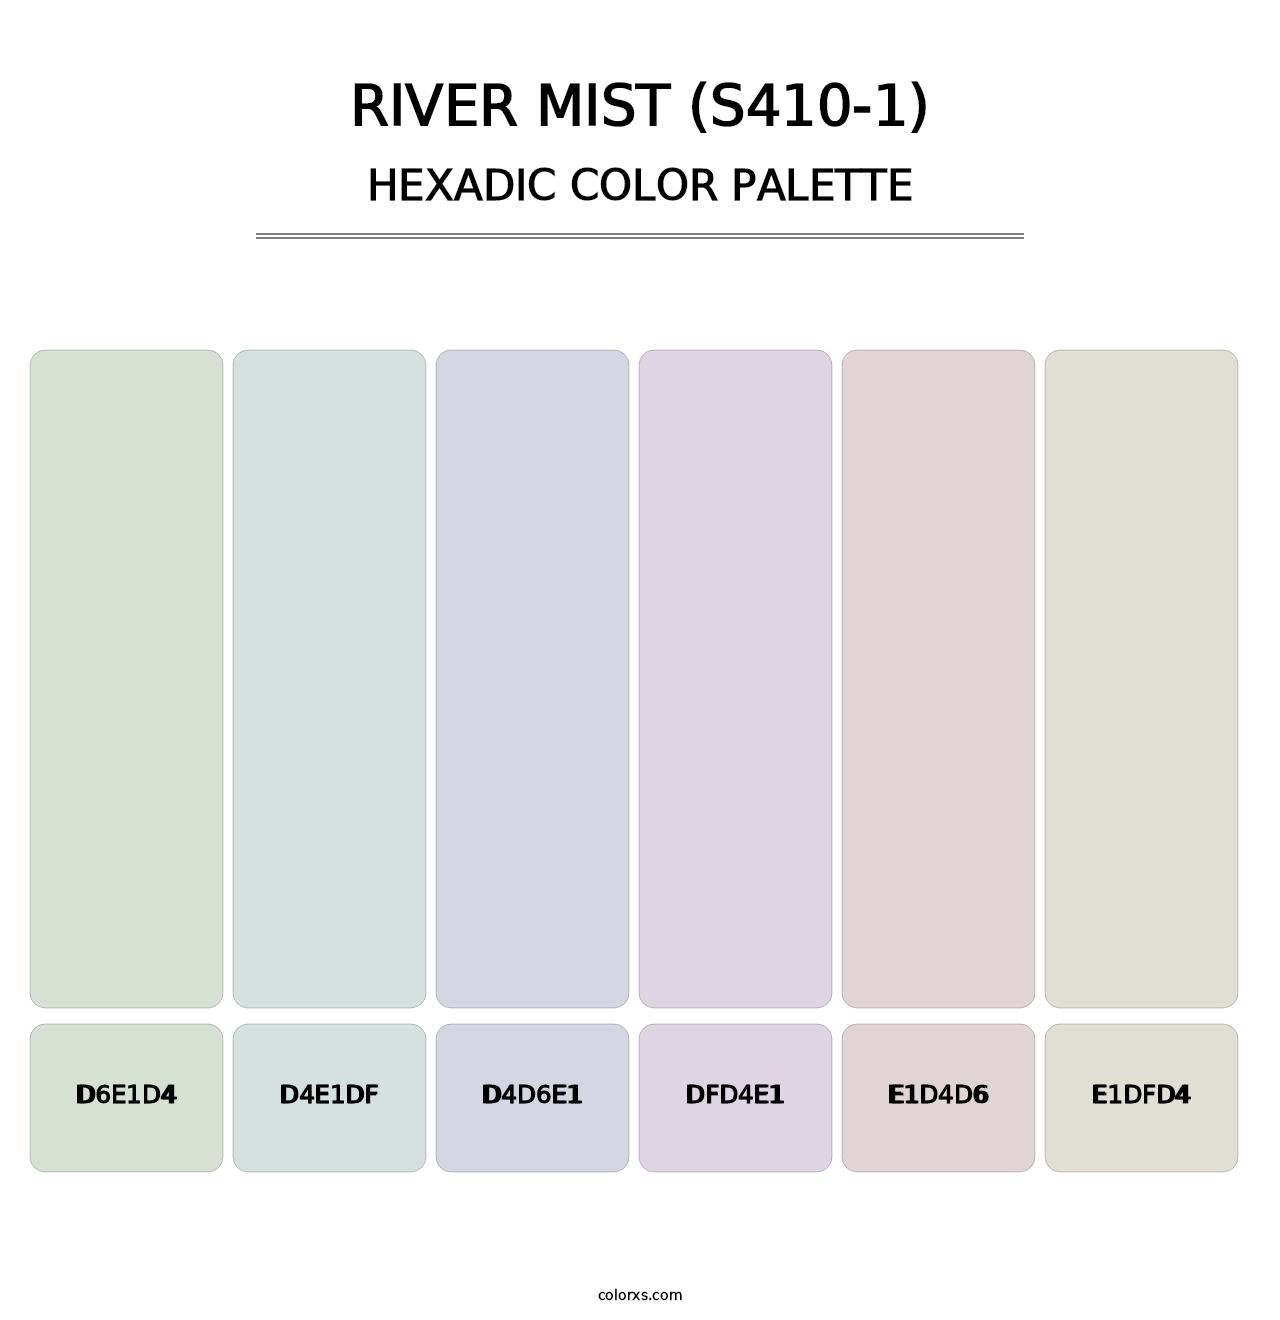 River Mist (S410-1) - Hexadic Color Palette